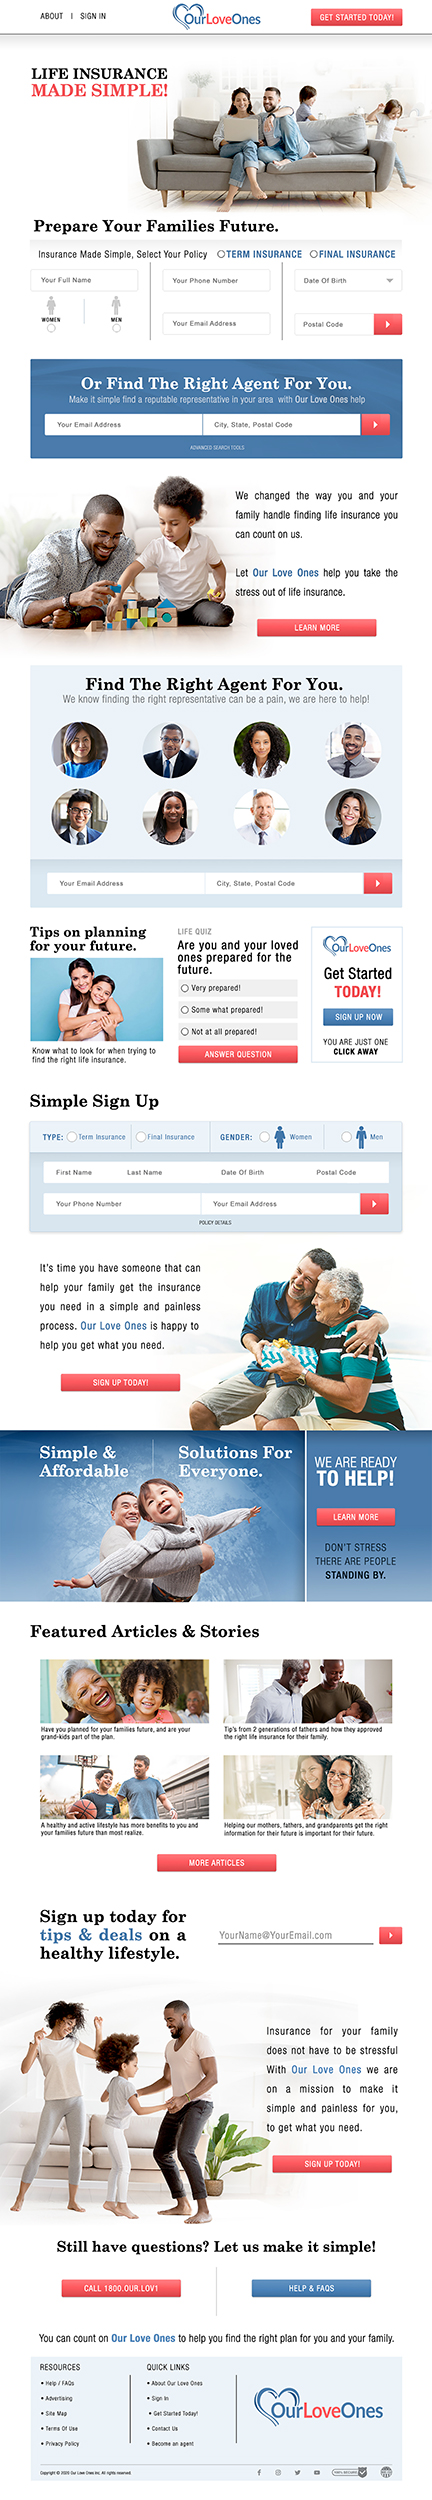 Our Love Ones Insurance Website Design